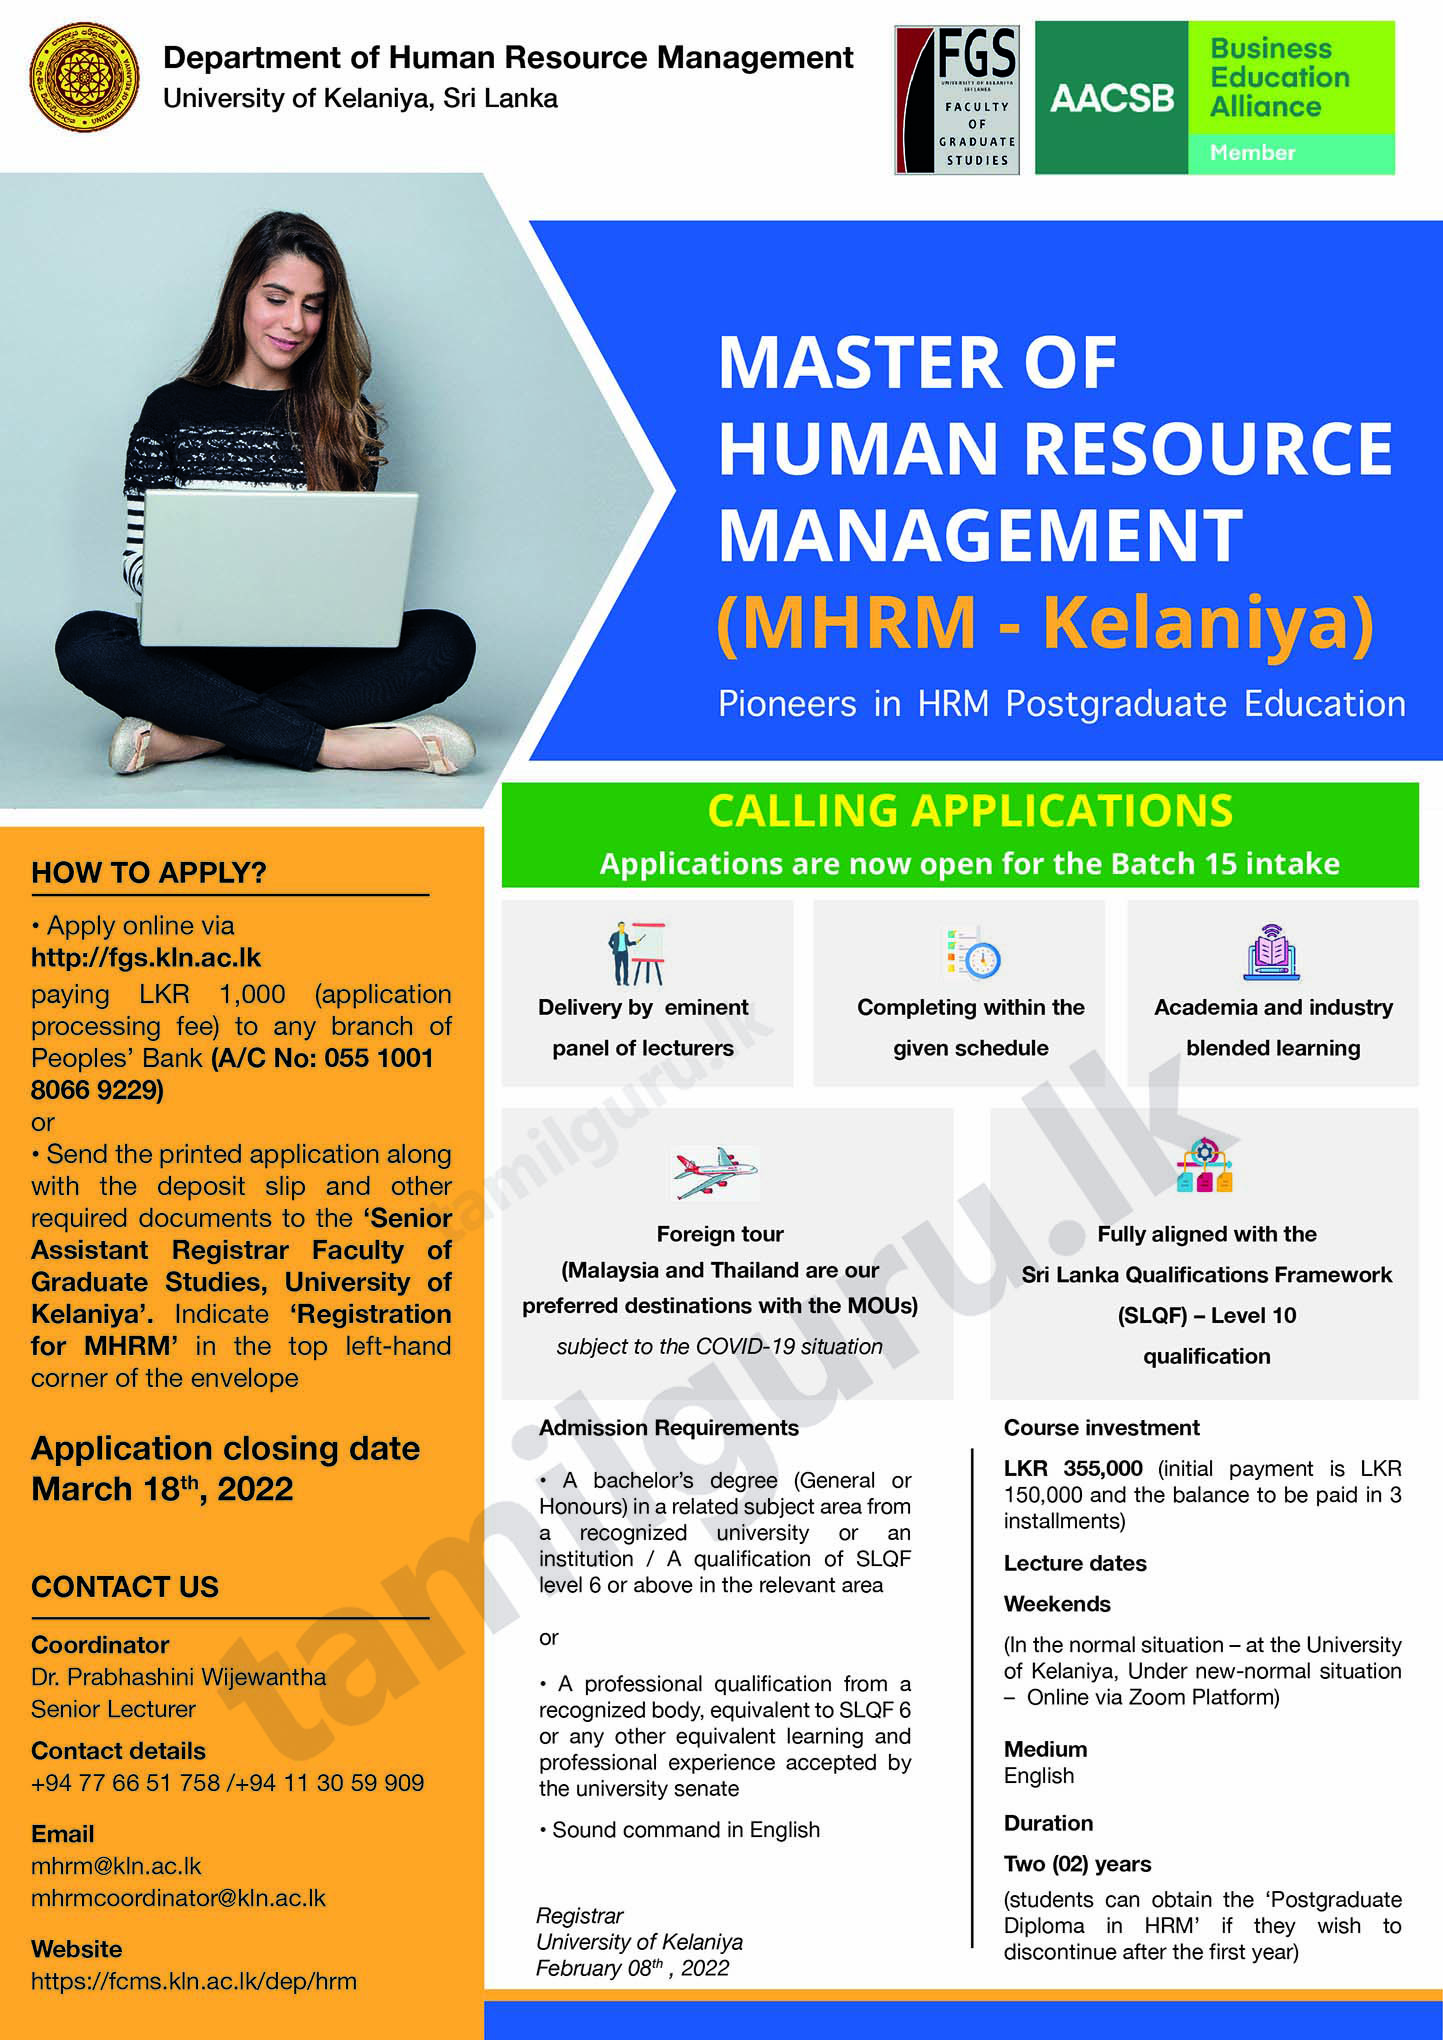 Calling Applications for Master of Human Resource Management (MHRM) 2022 - University of Kelaniya - Apply Now